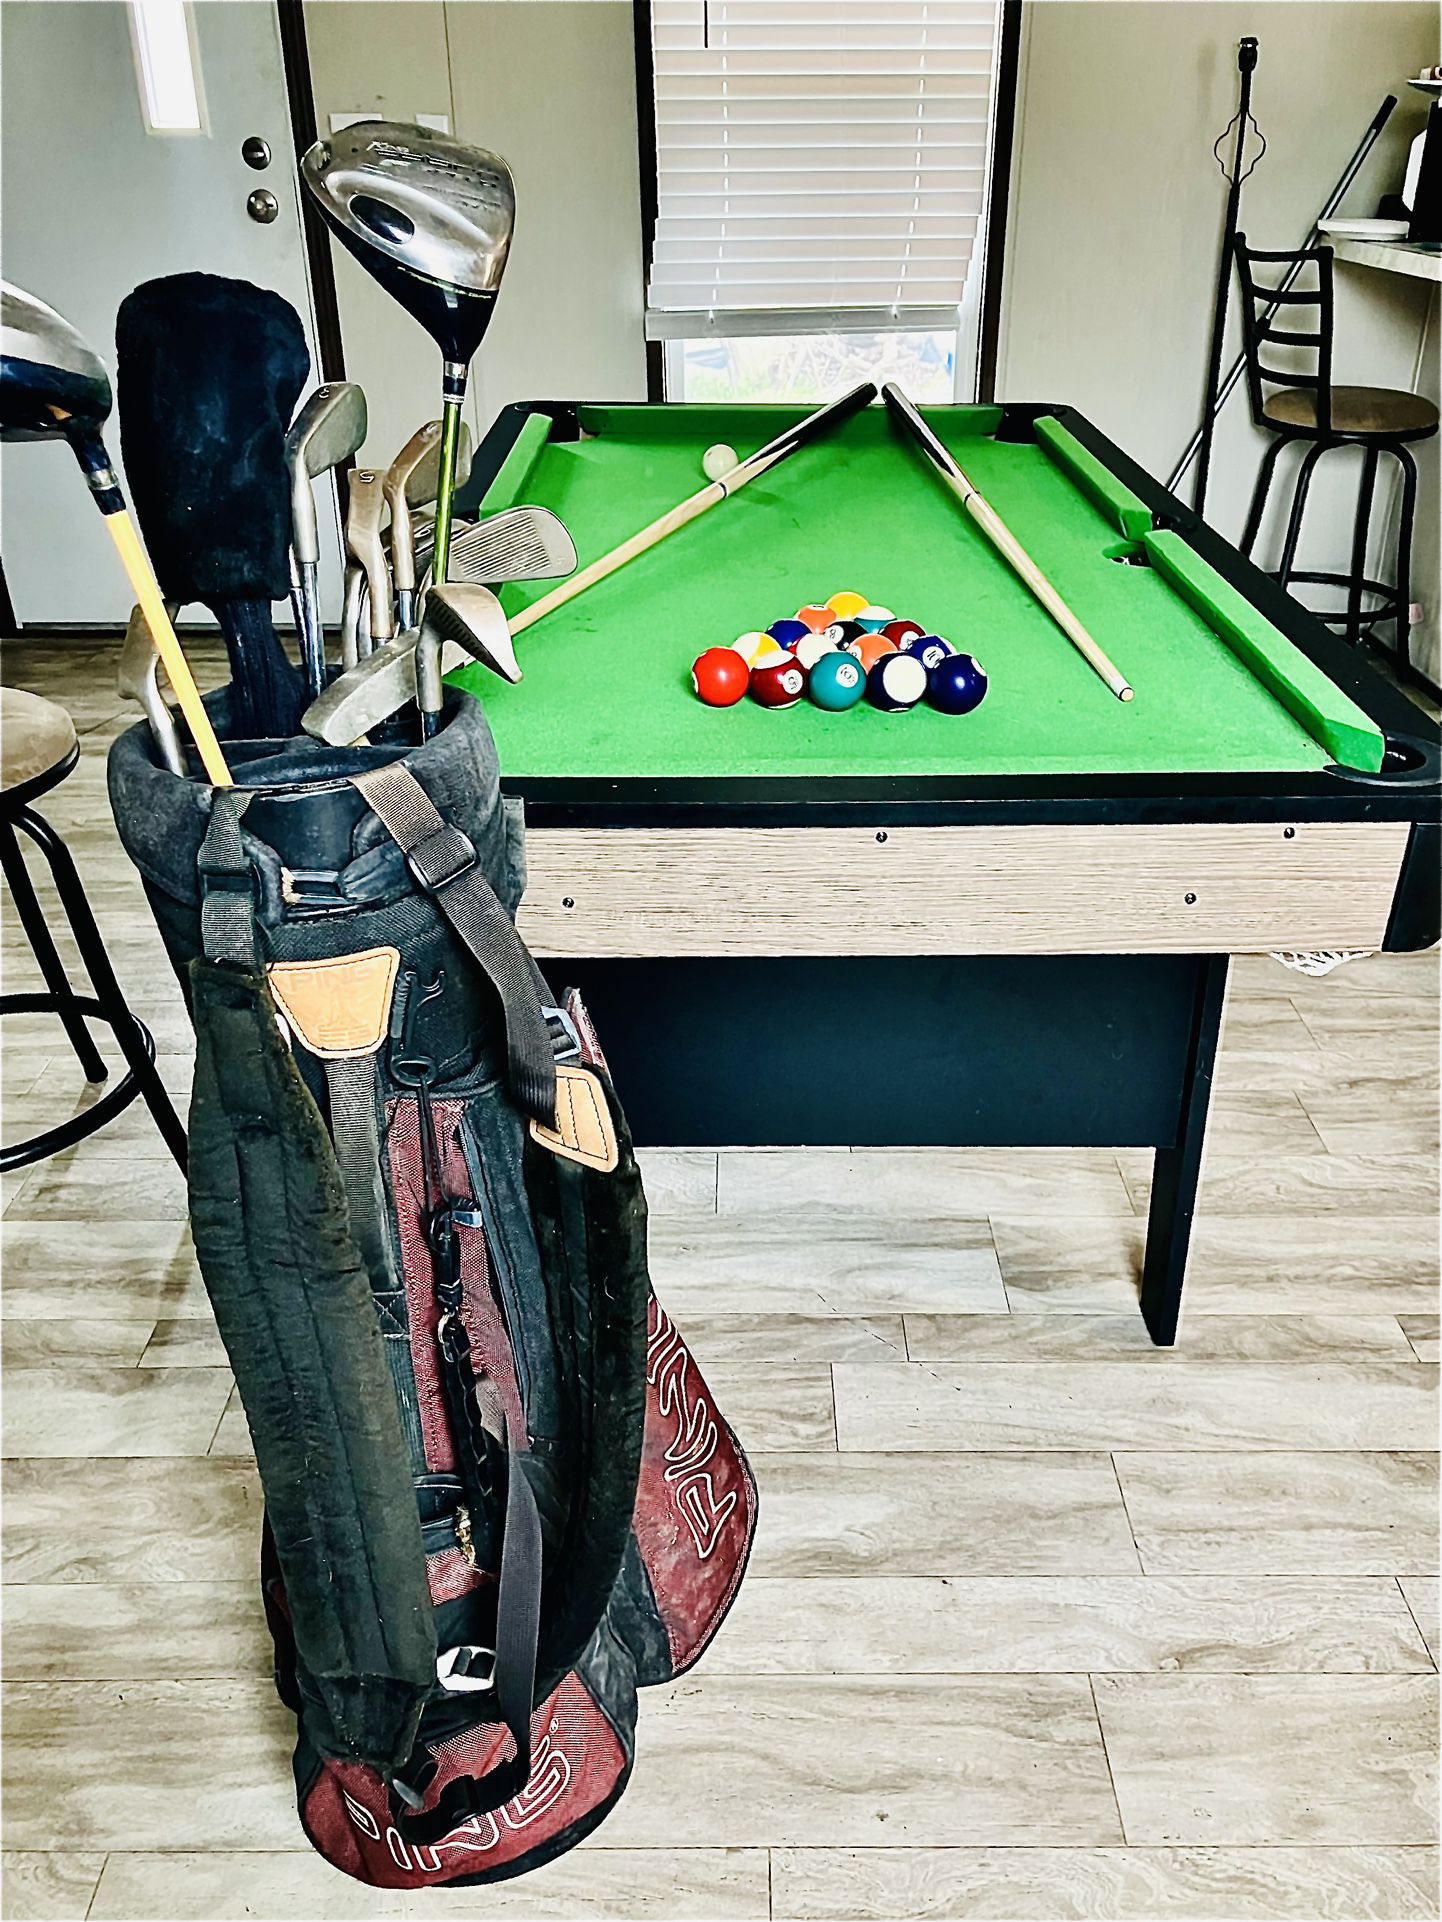 Mini “Game Room” Pool Table